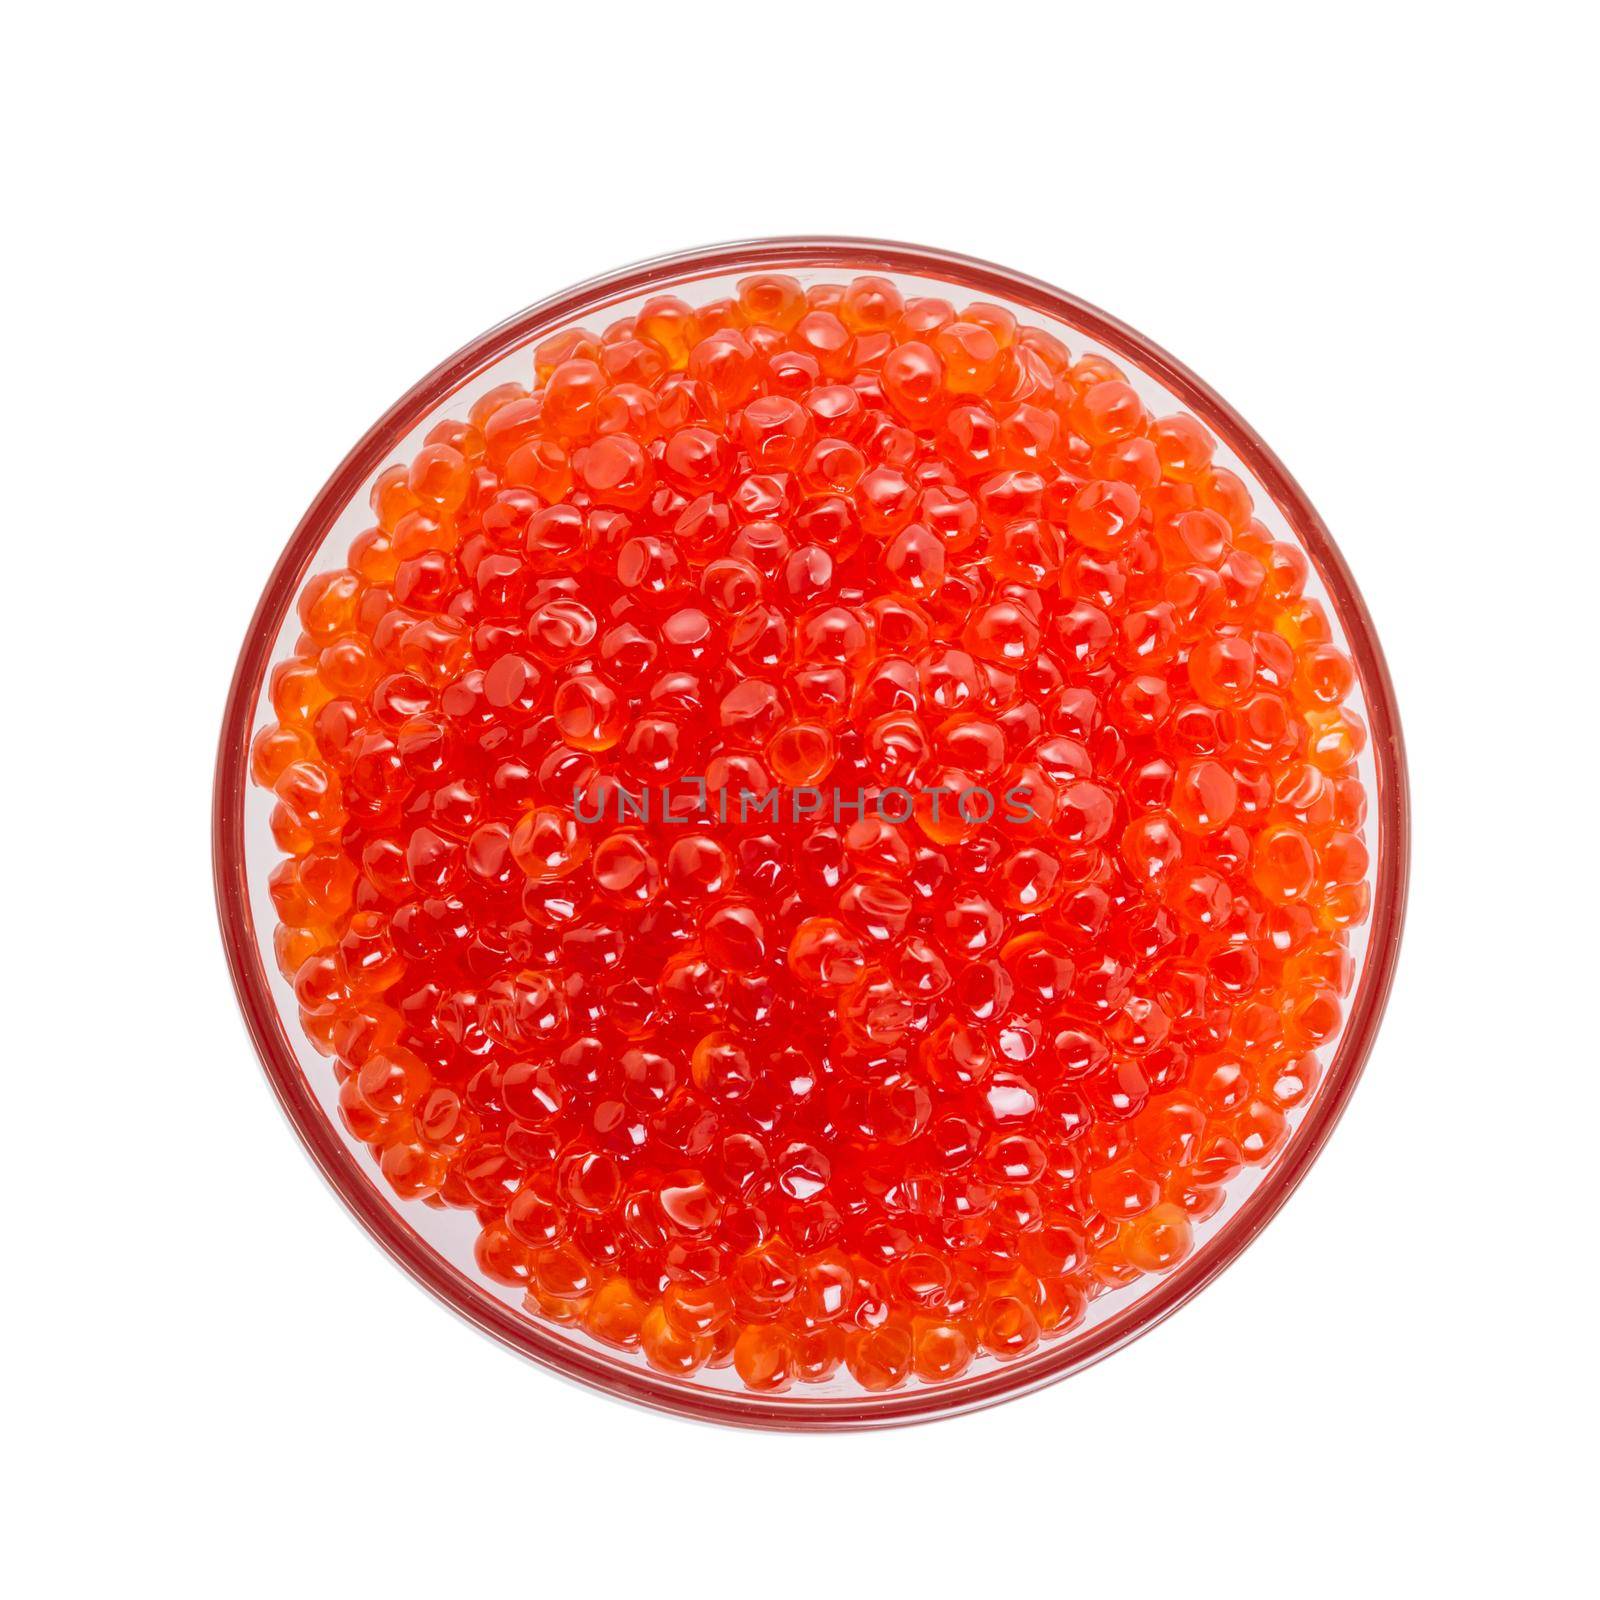 Tasty red caviar by alexAleksei